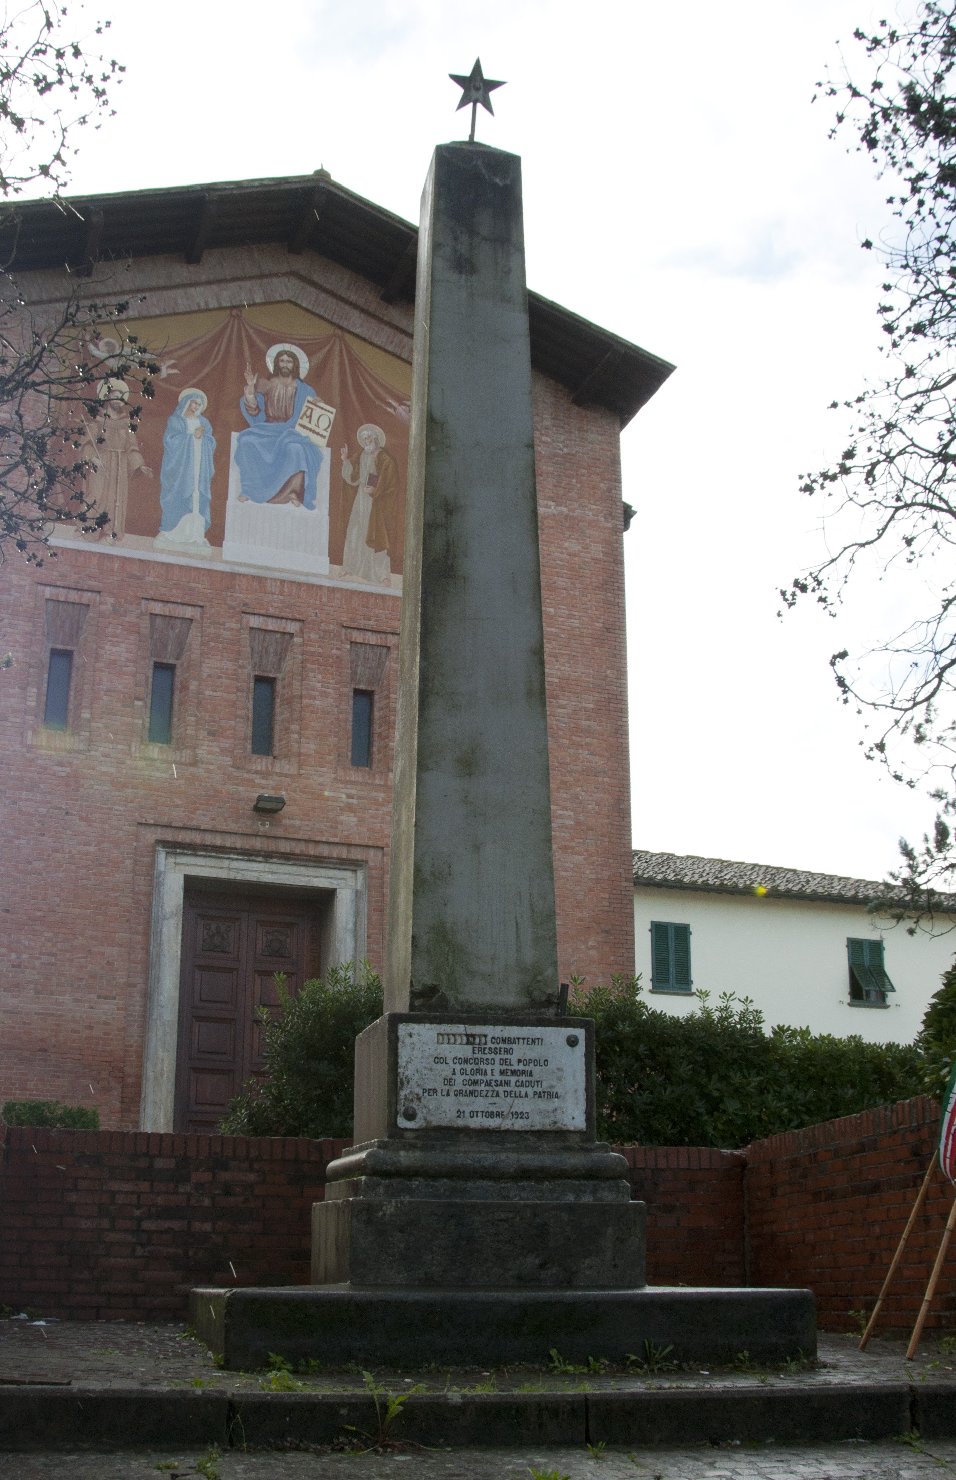 monumento ai caduti - ad obelisco - ambito toscano (sec. XX)